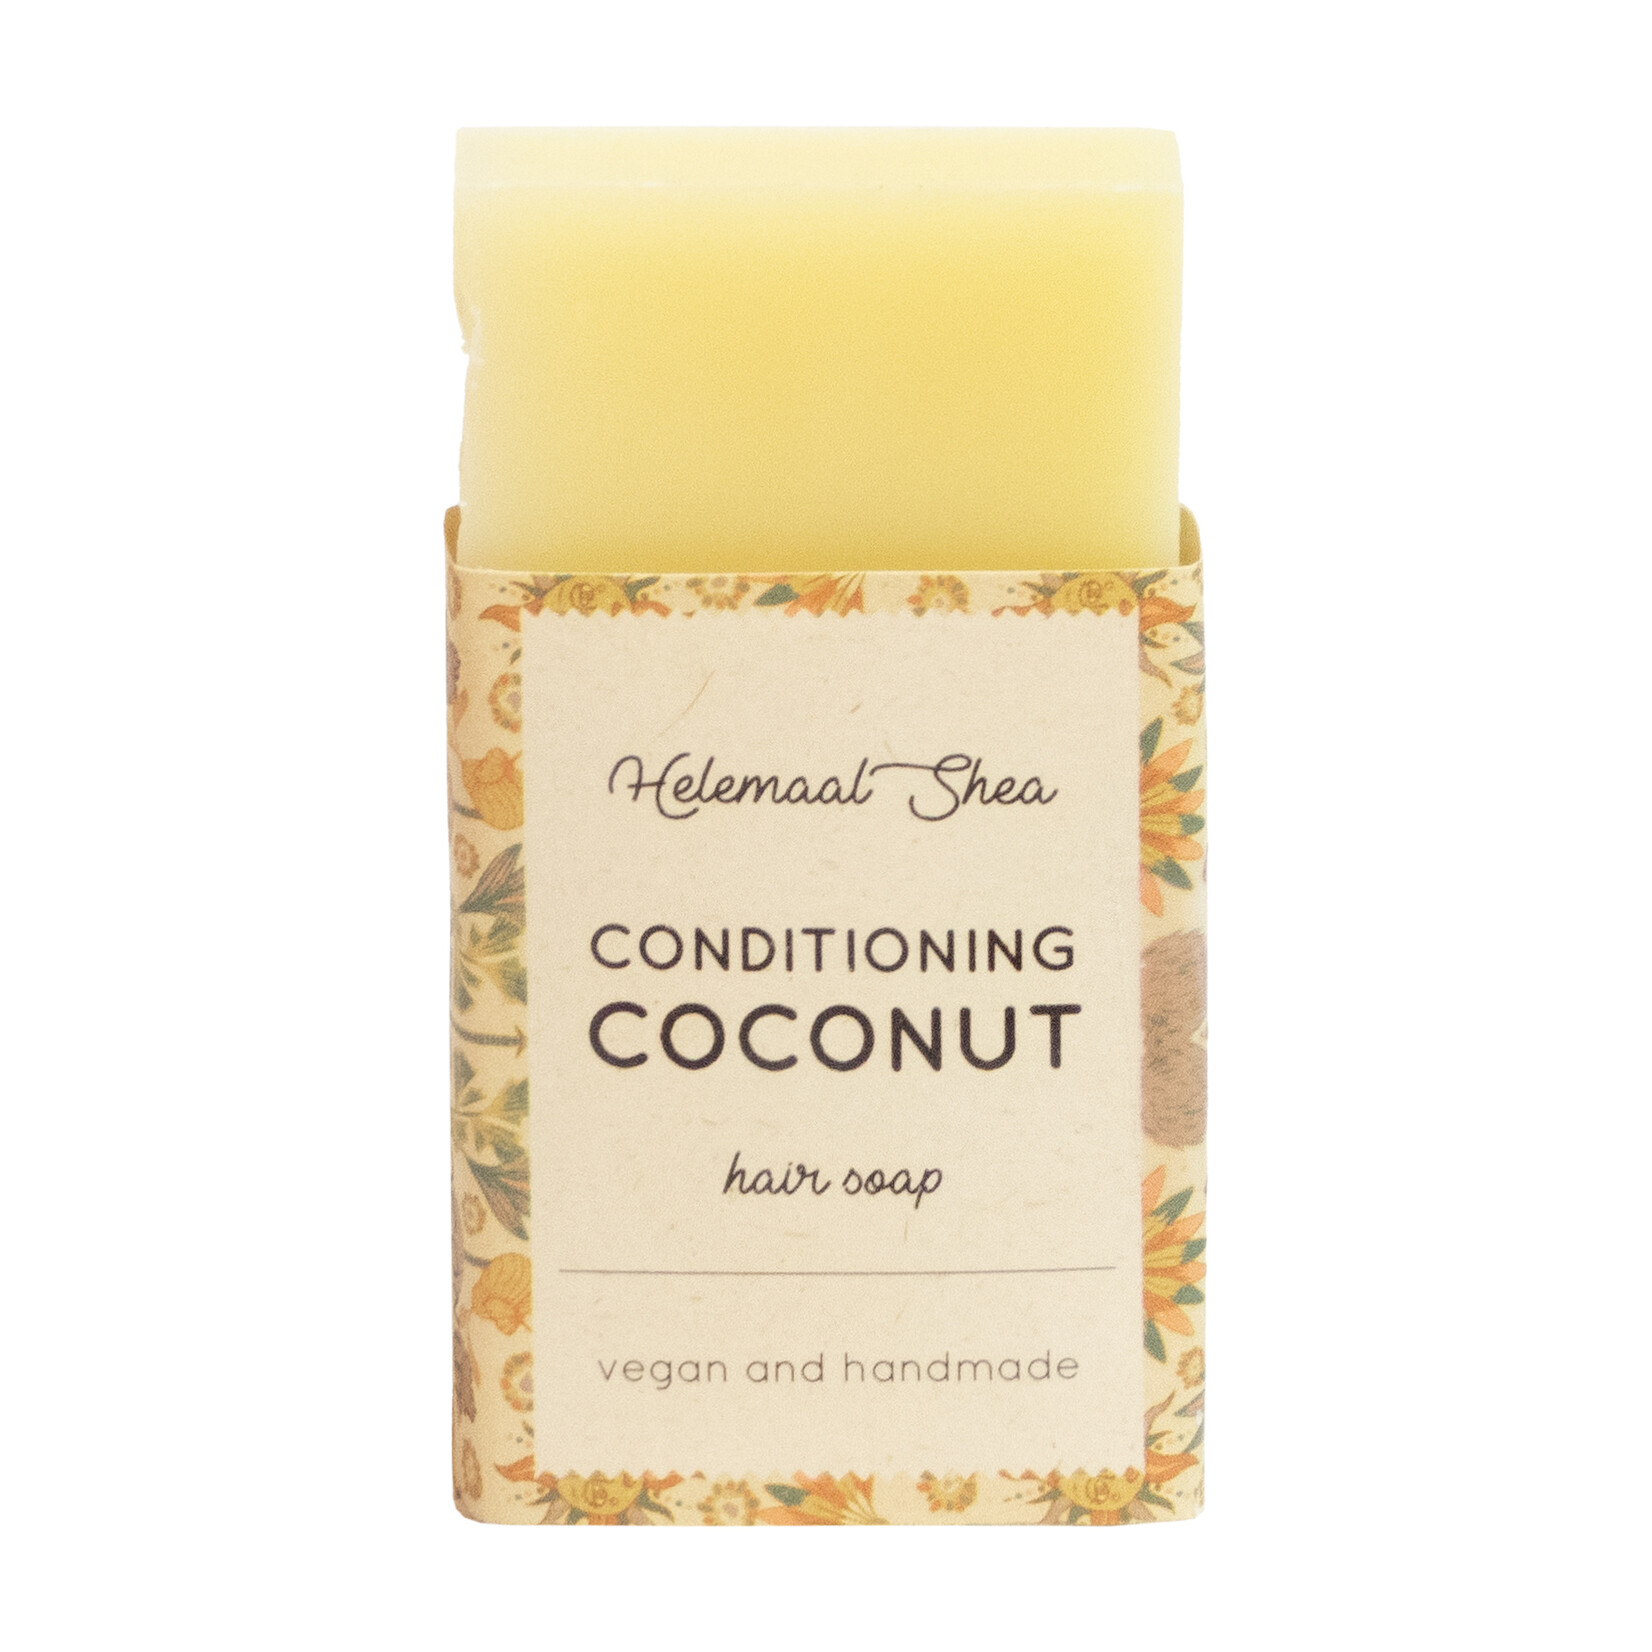 Conditioning Coconut hair soap - Mini